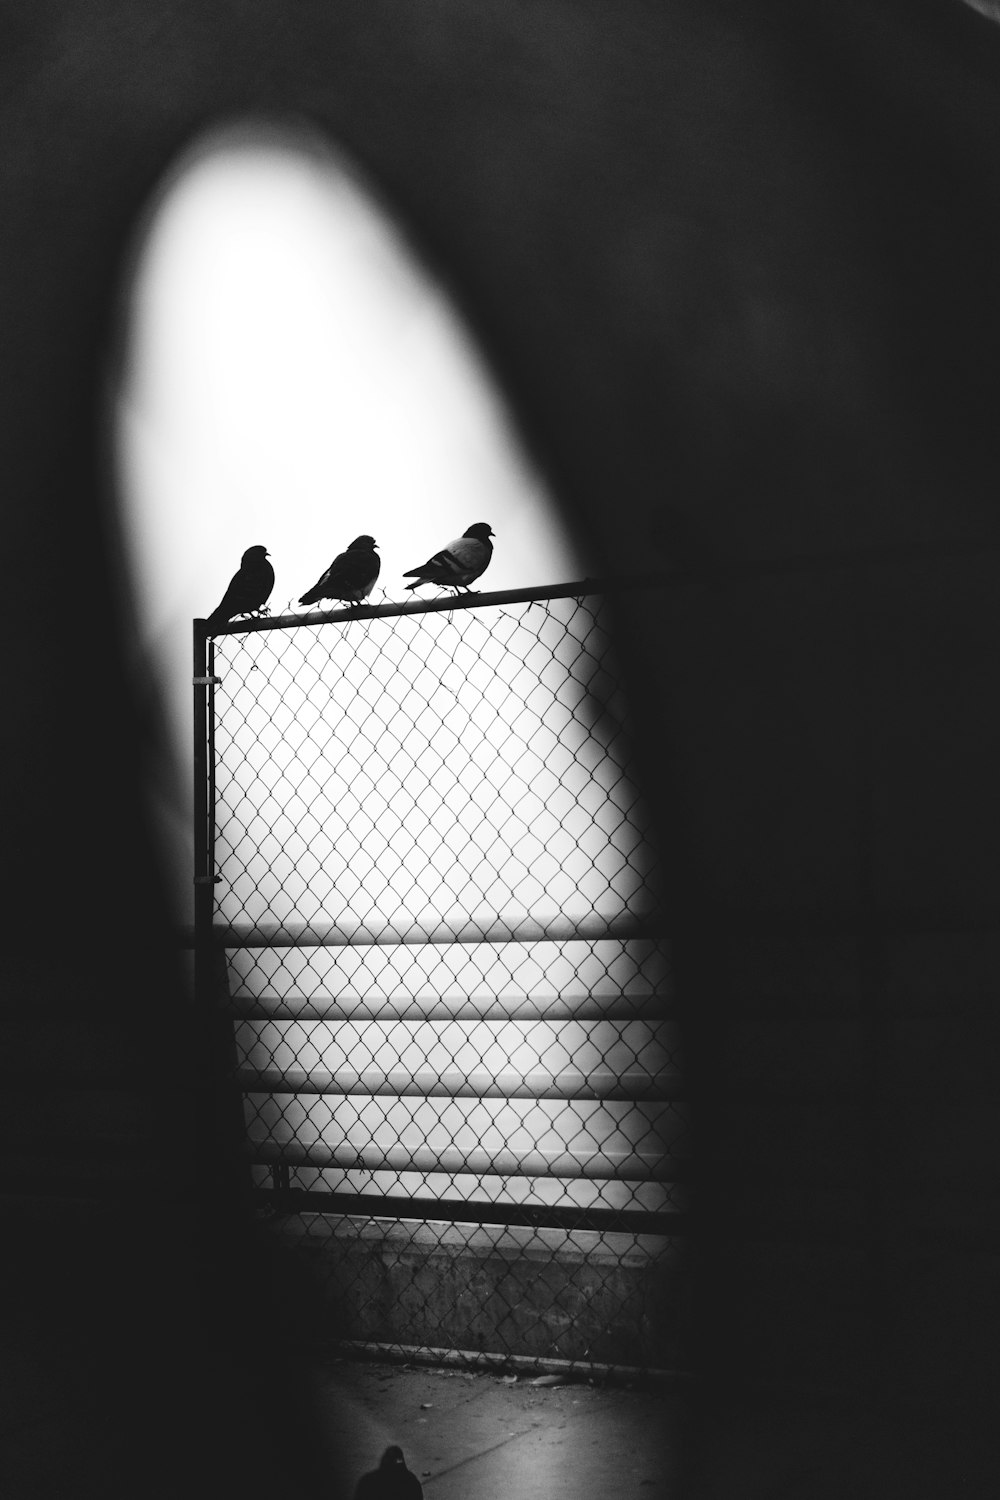 fotografia em tons de cinza três pombos